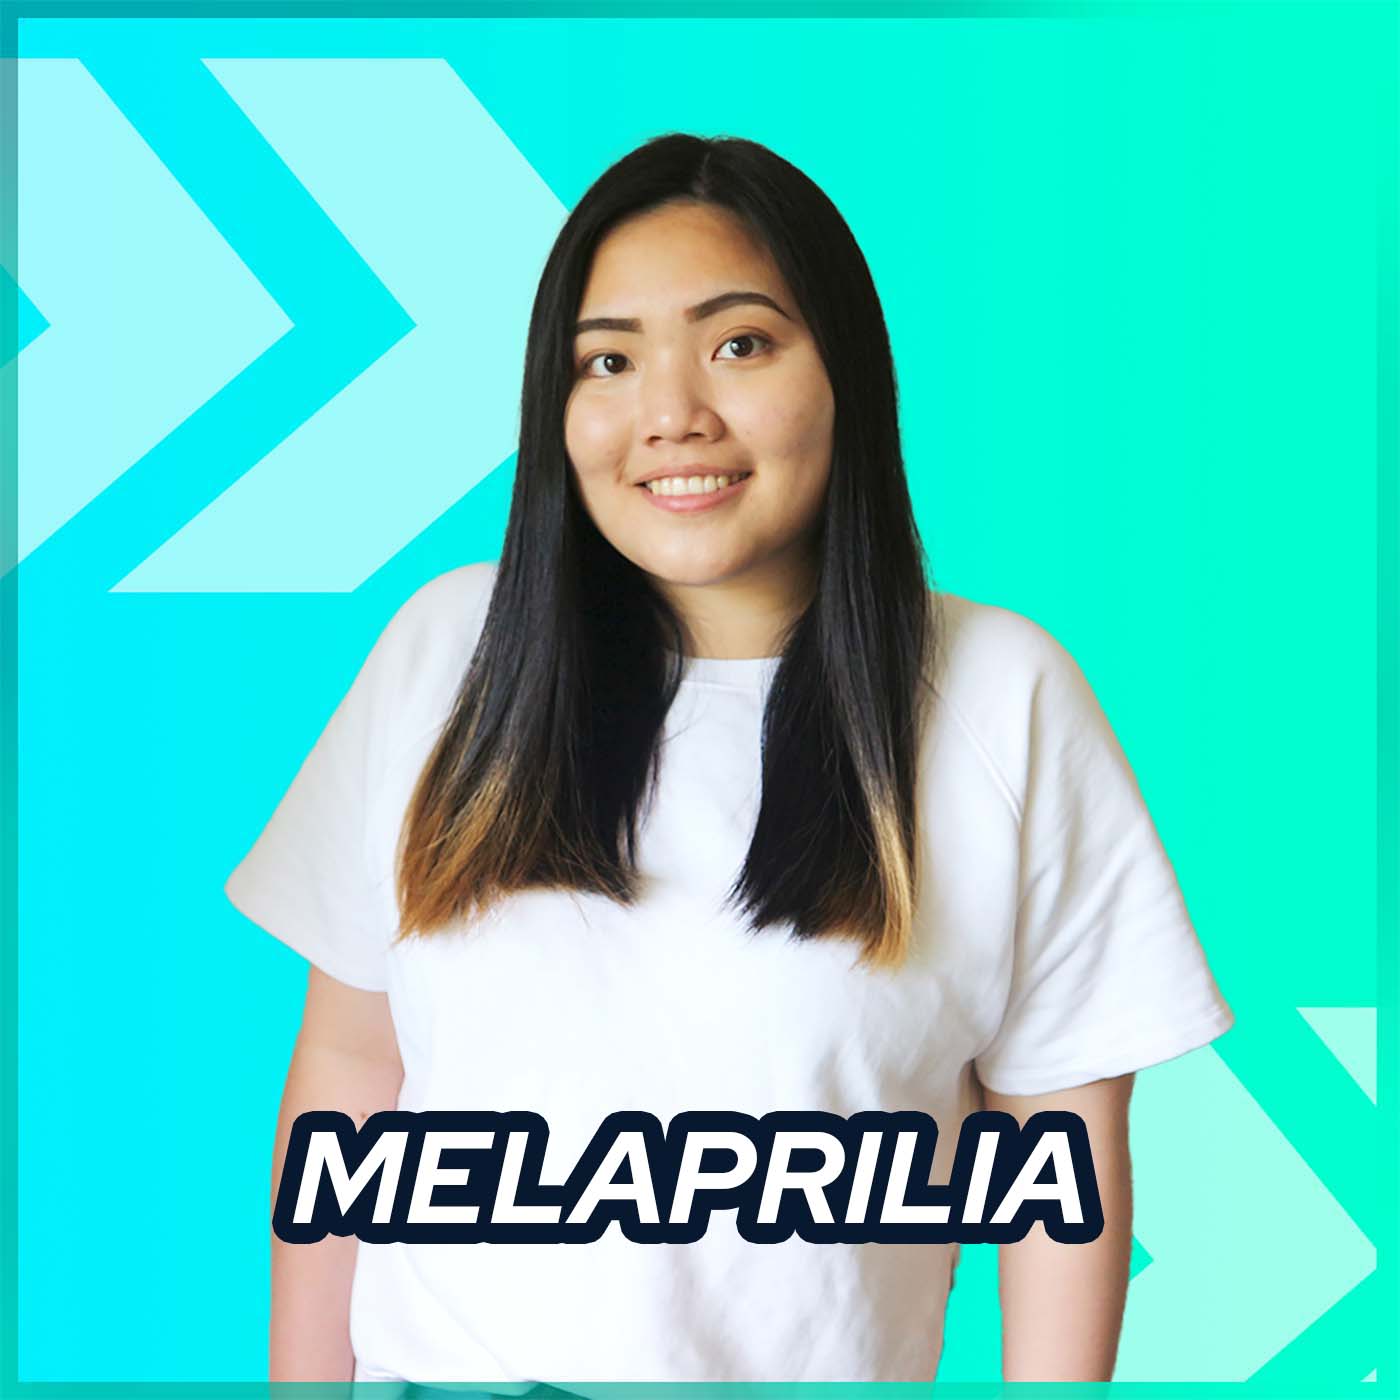 Melaprilia